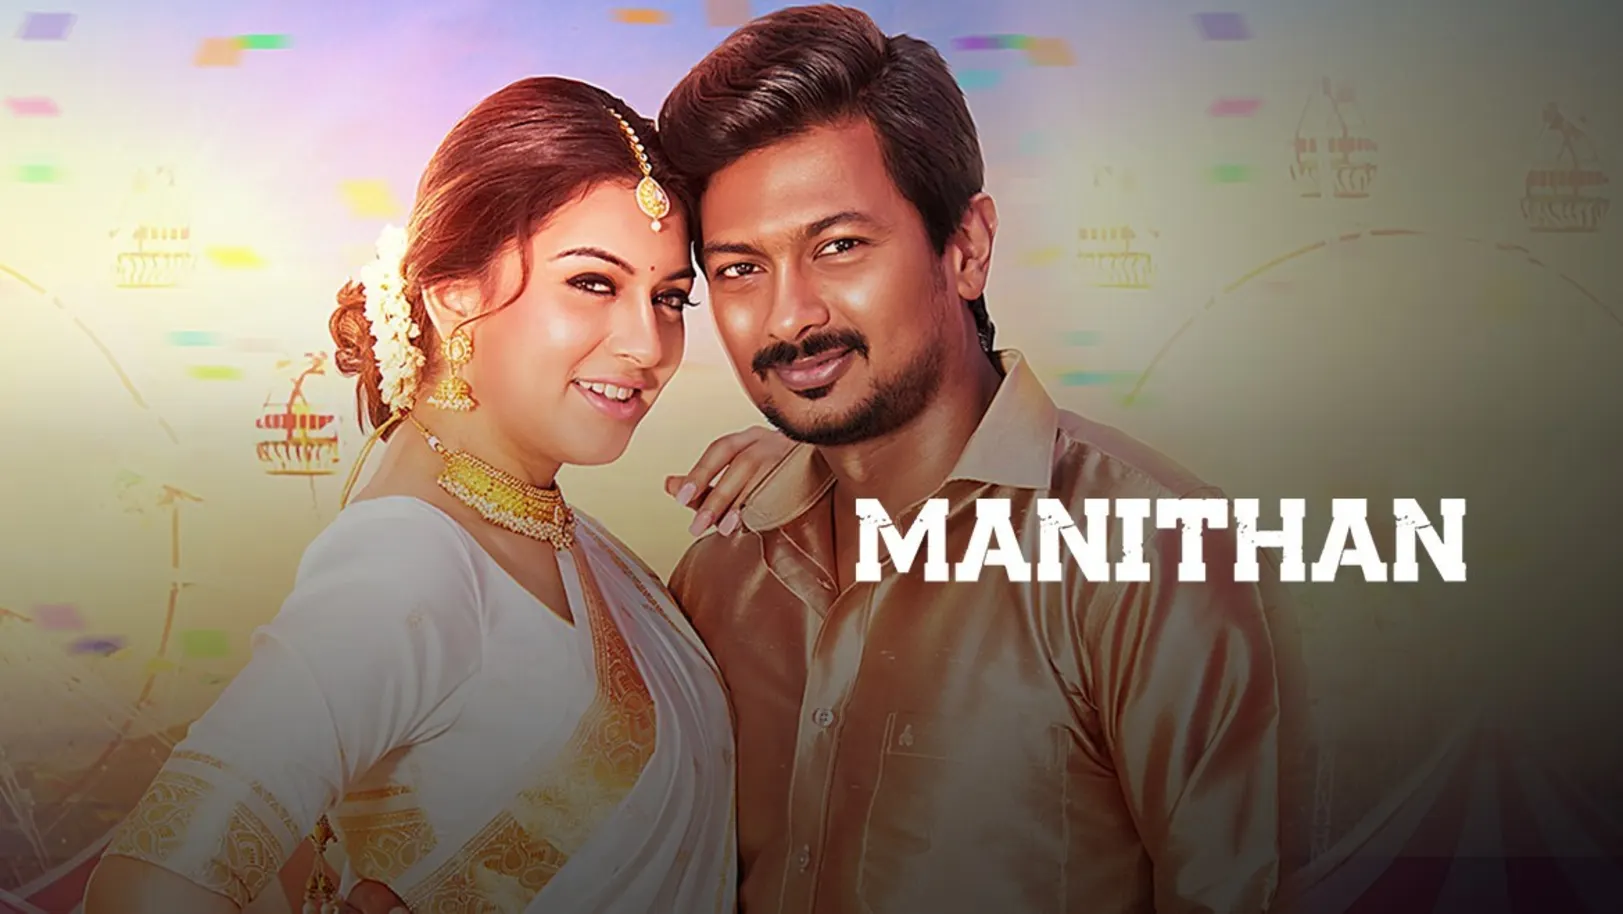 Manithan Movie